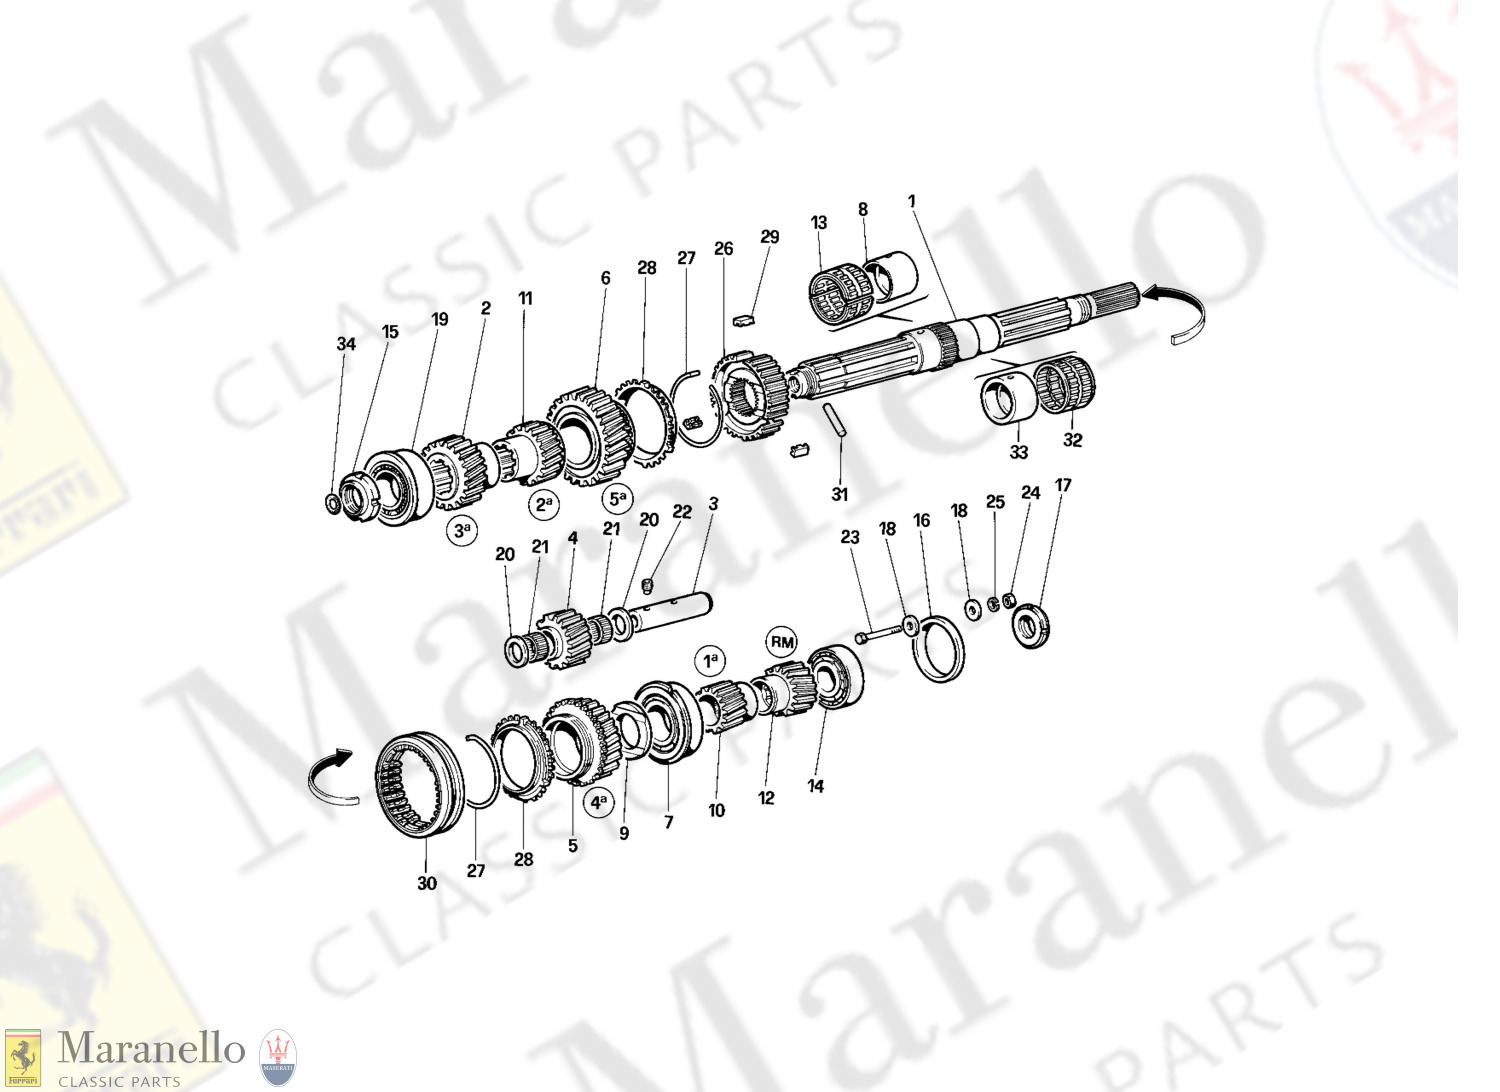 032 - Main Shaft Gears